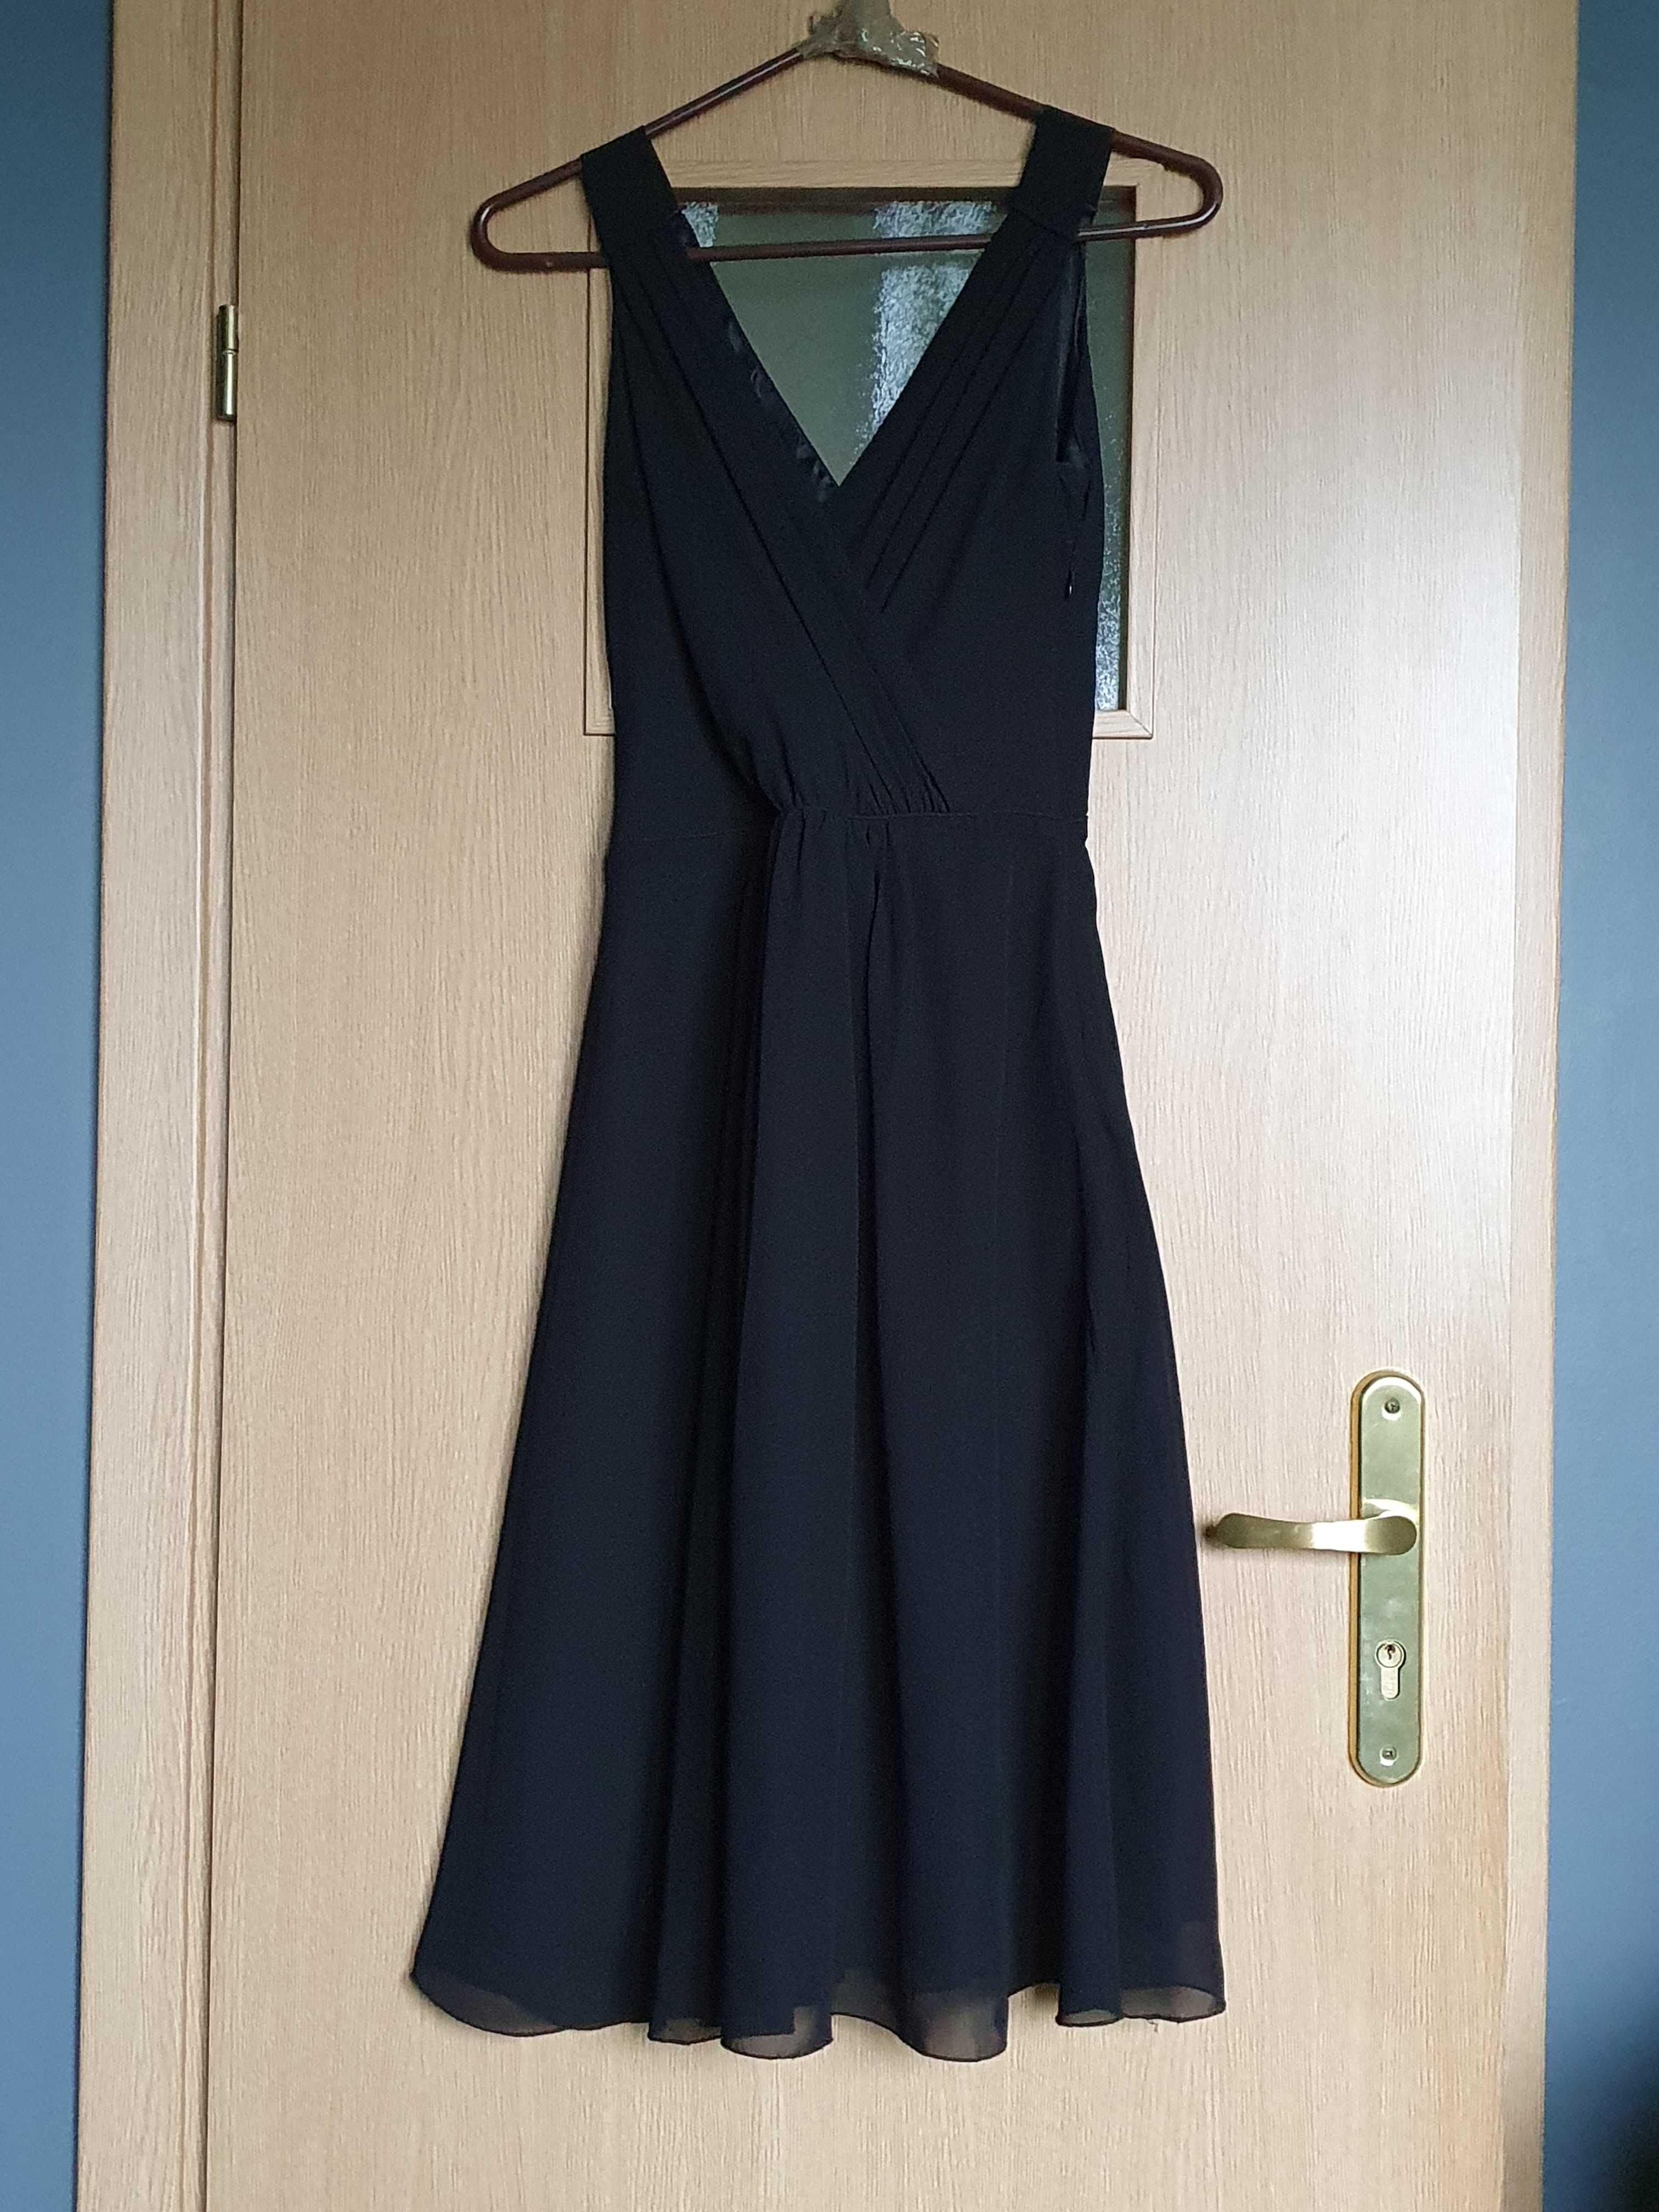 Sukienka czarna klasyczna